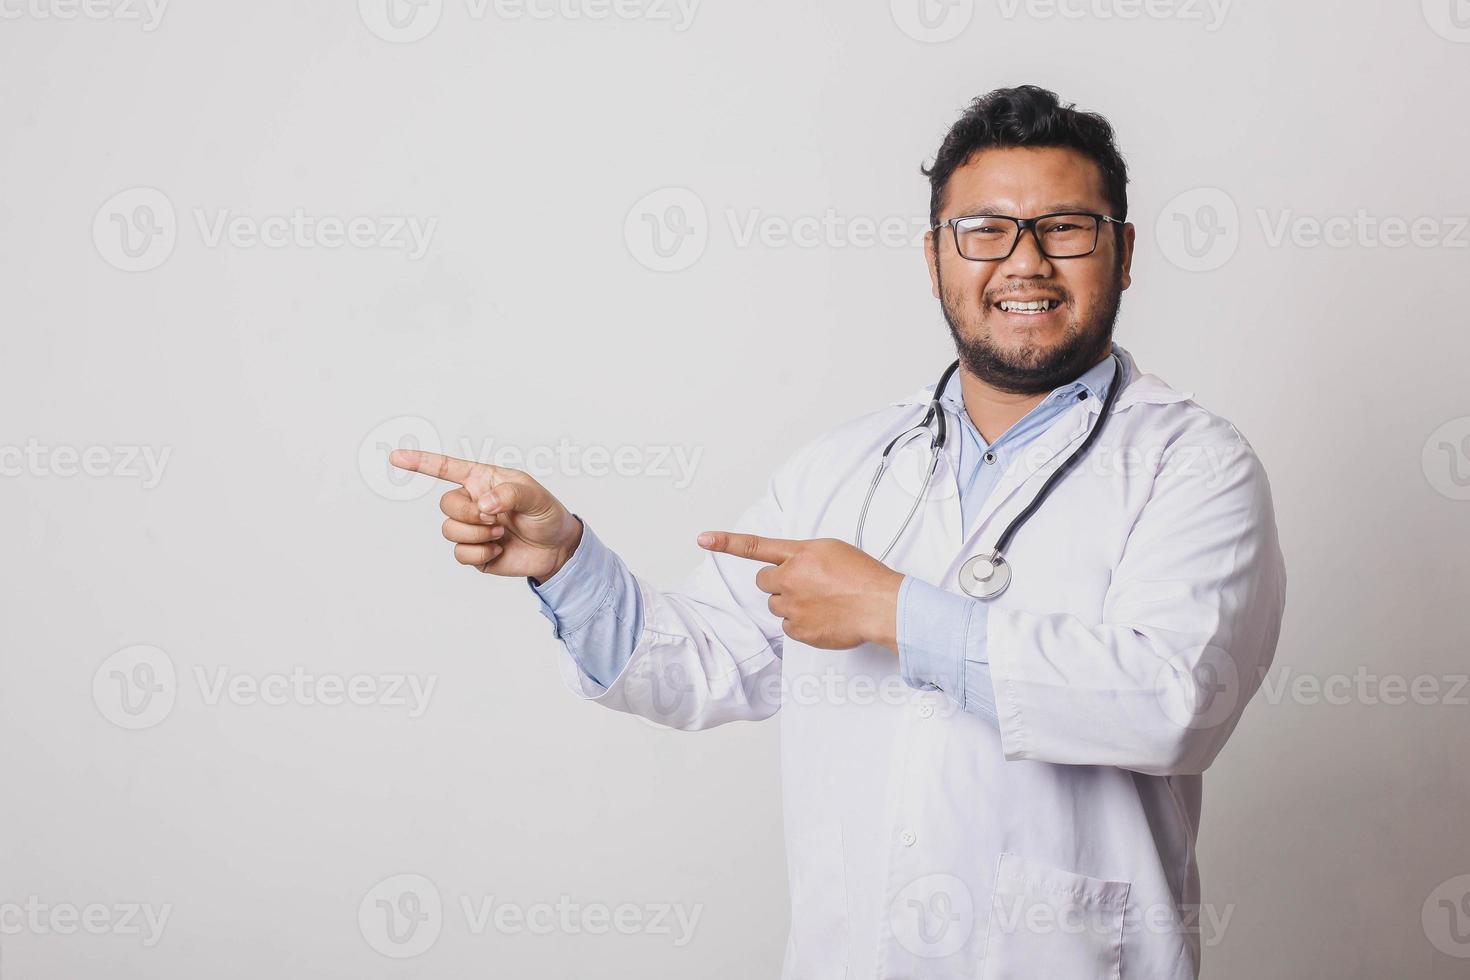 alegre médico masculino com gesto de apontar lateralmente no espaço de cópia isolado no fundo branco foto